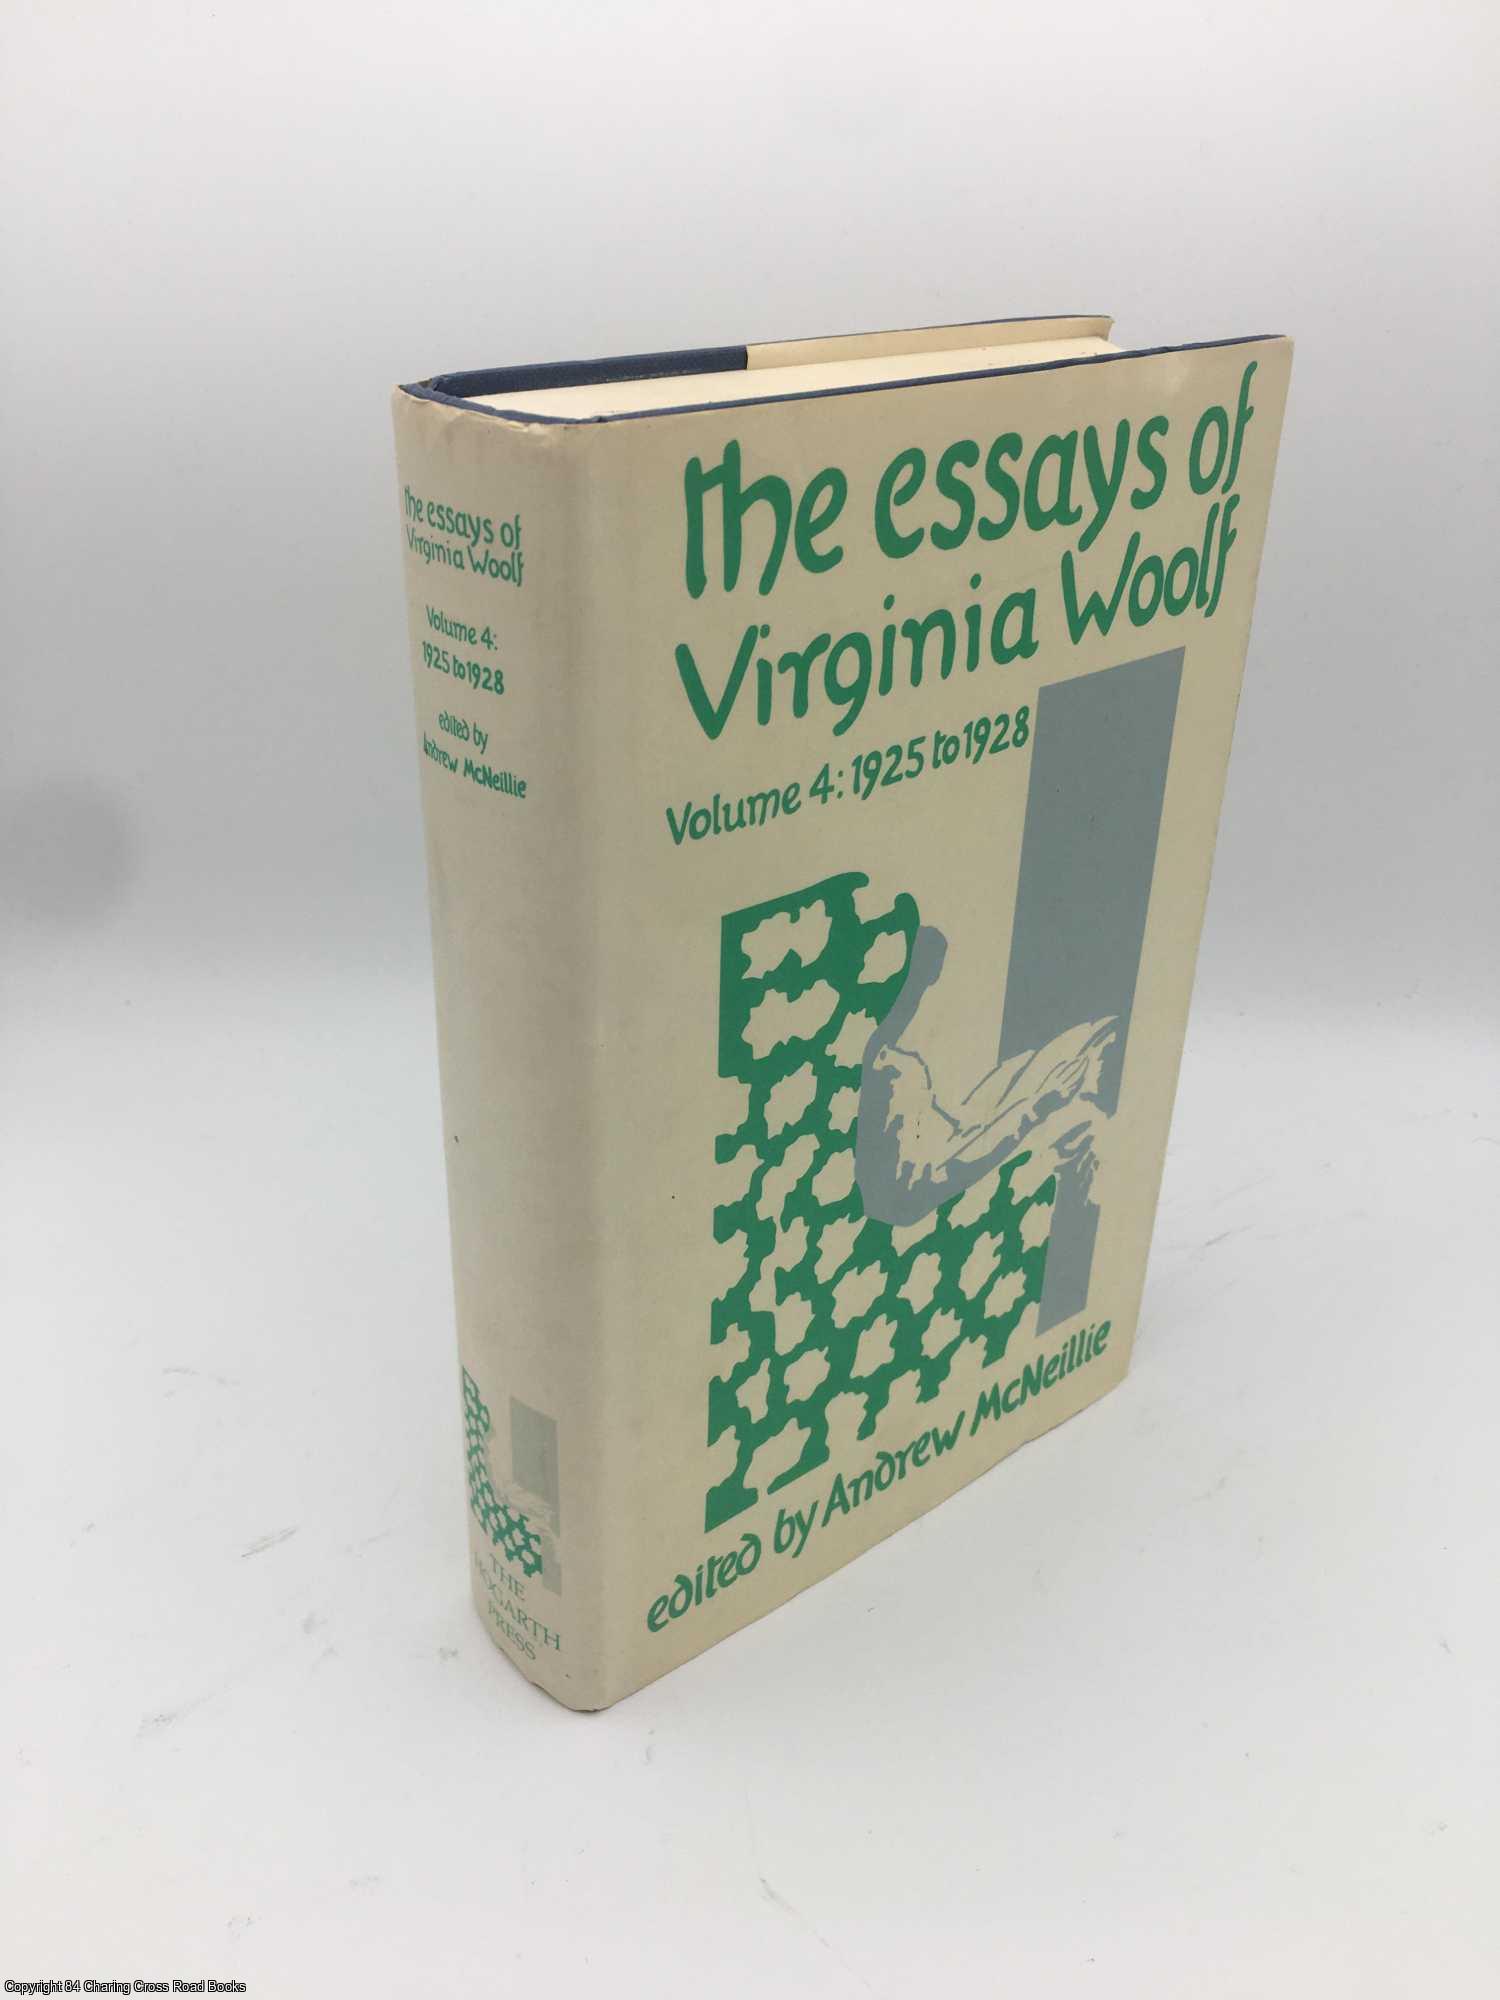 Woolf, Virginia; McNeillie, Andrew - The Essays of Virginia Woolf 1925-1928 vol 4